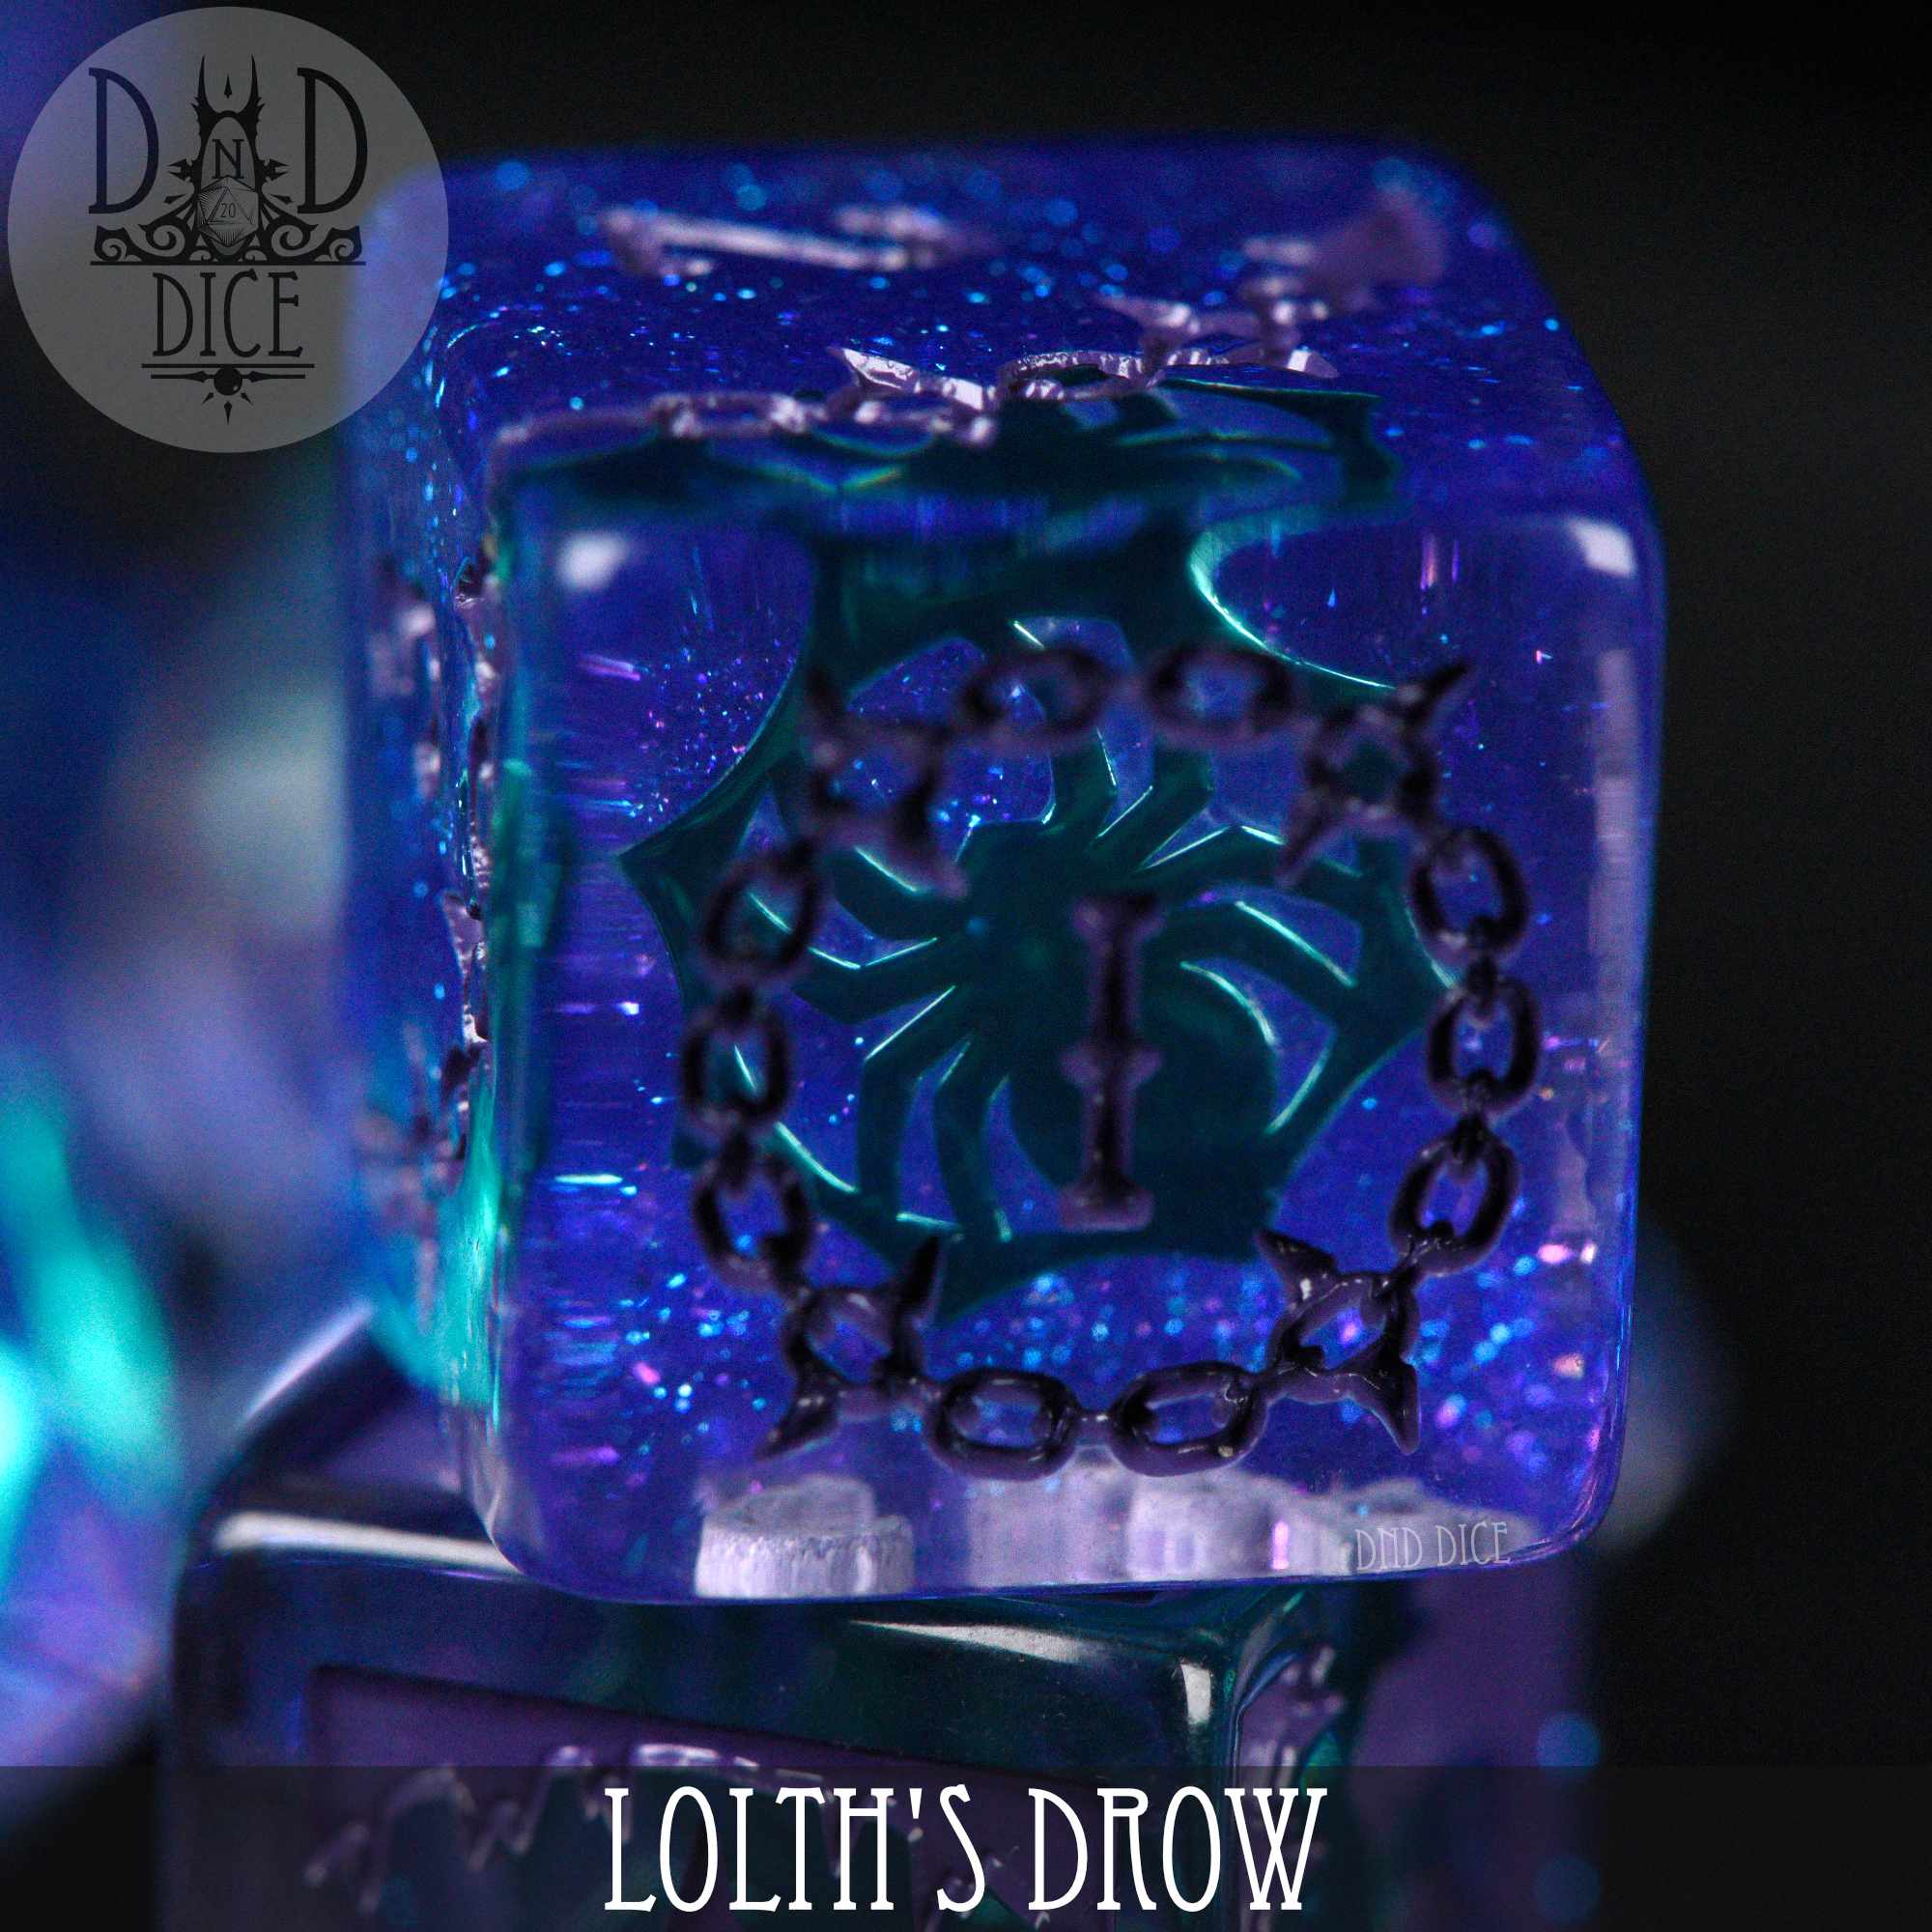 Lolth's Drow 11 Dice Set